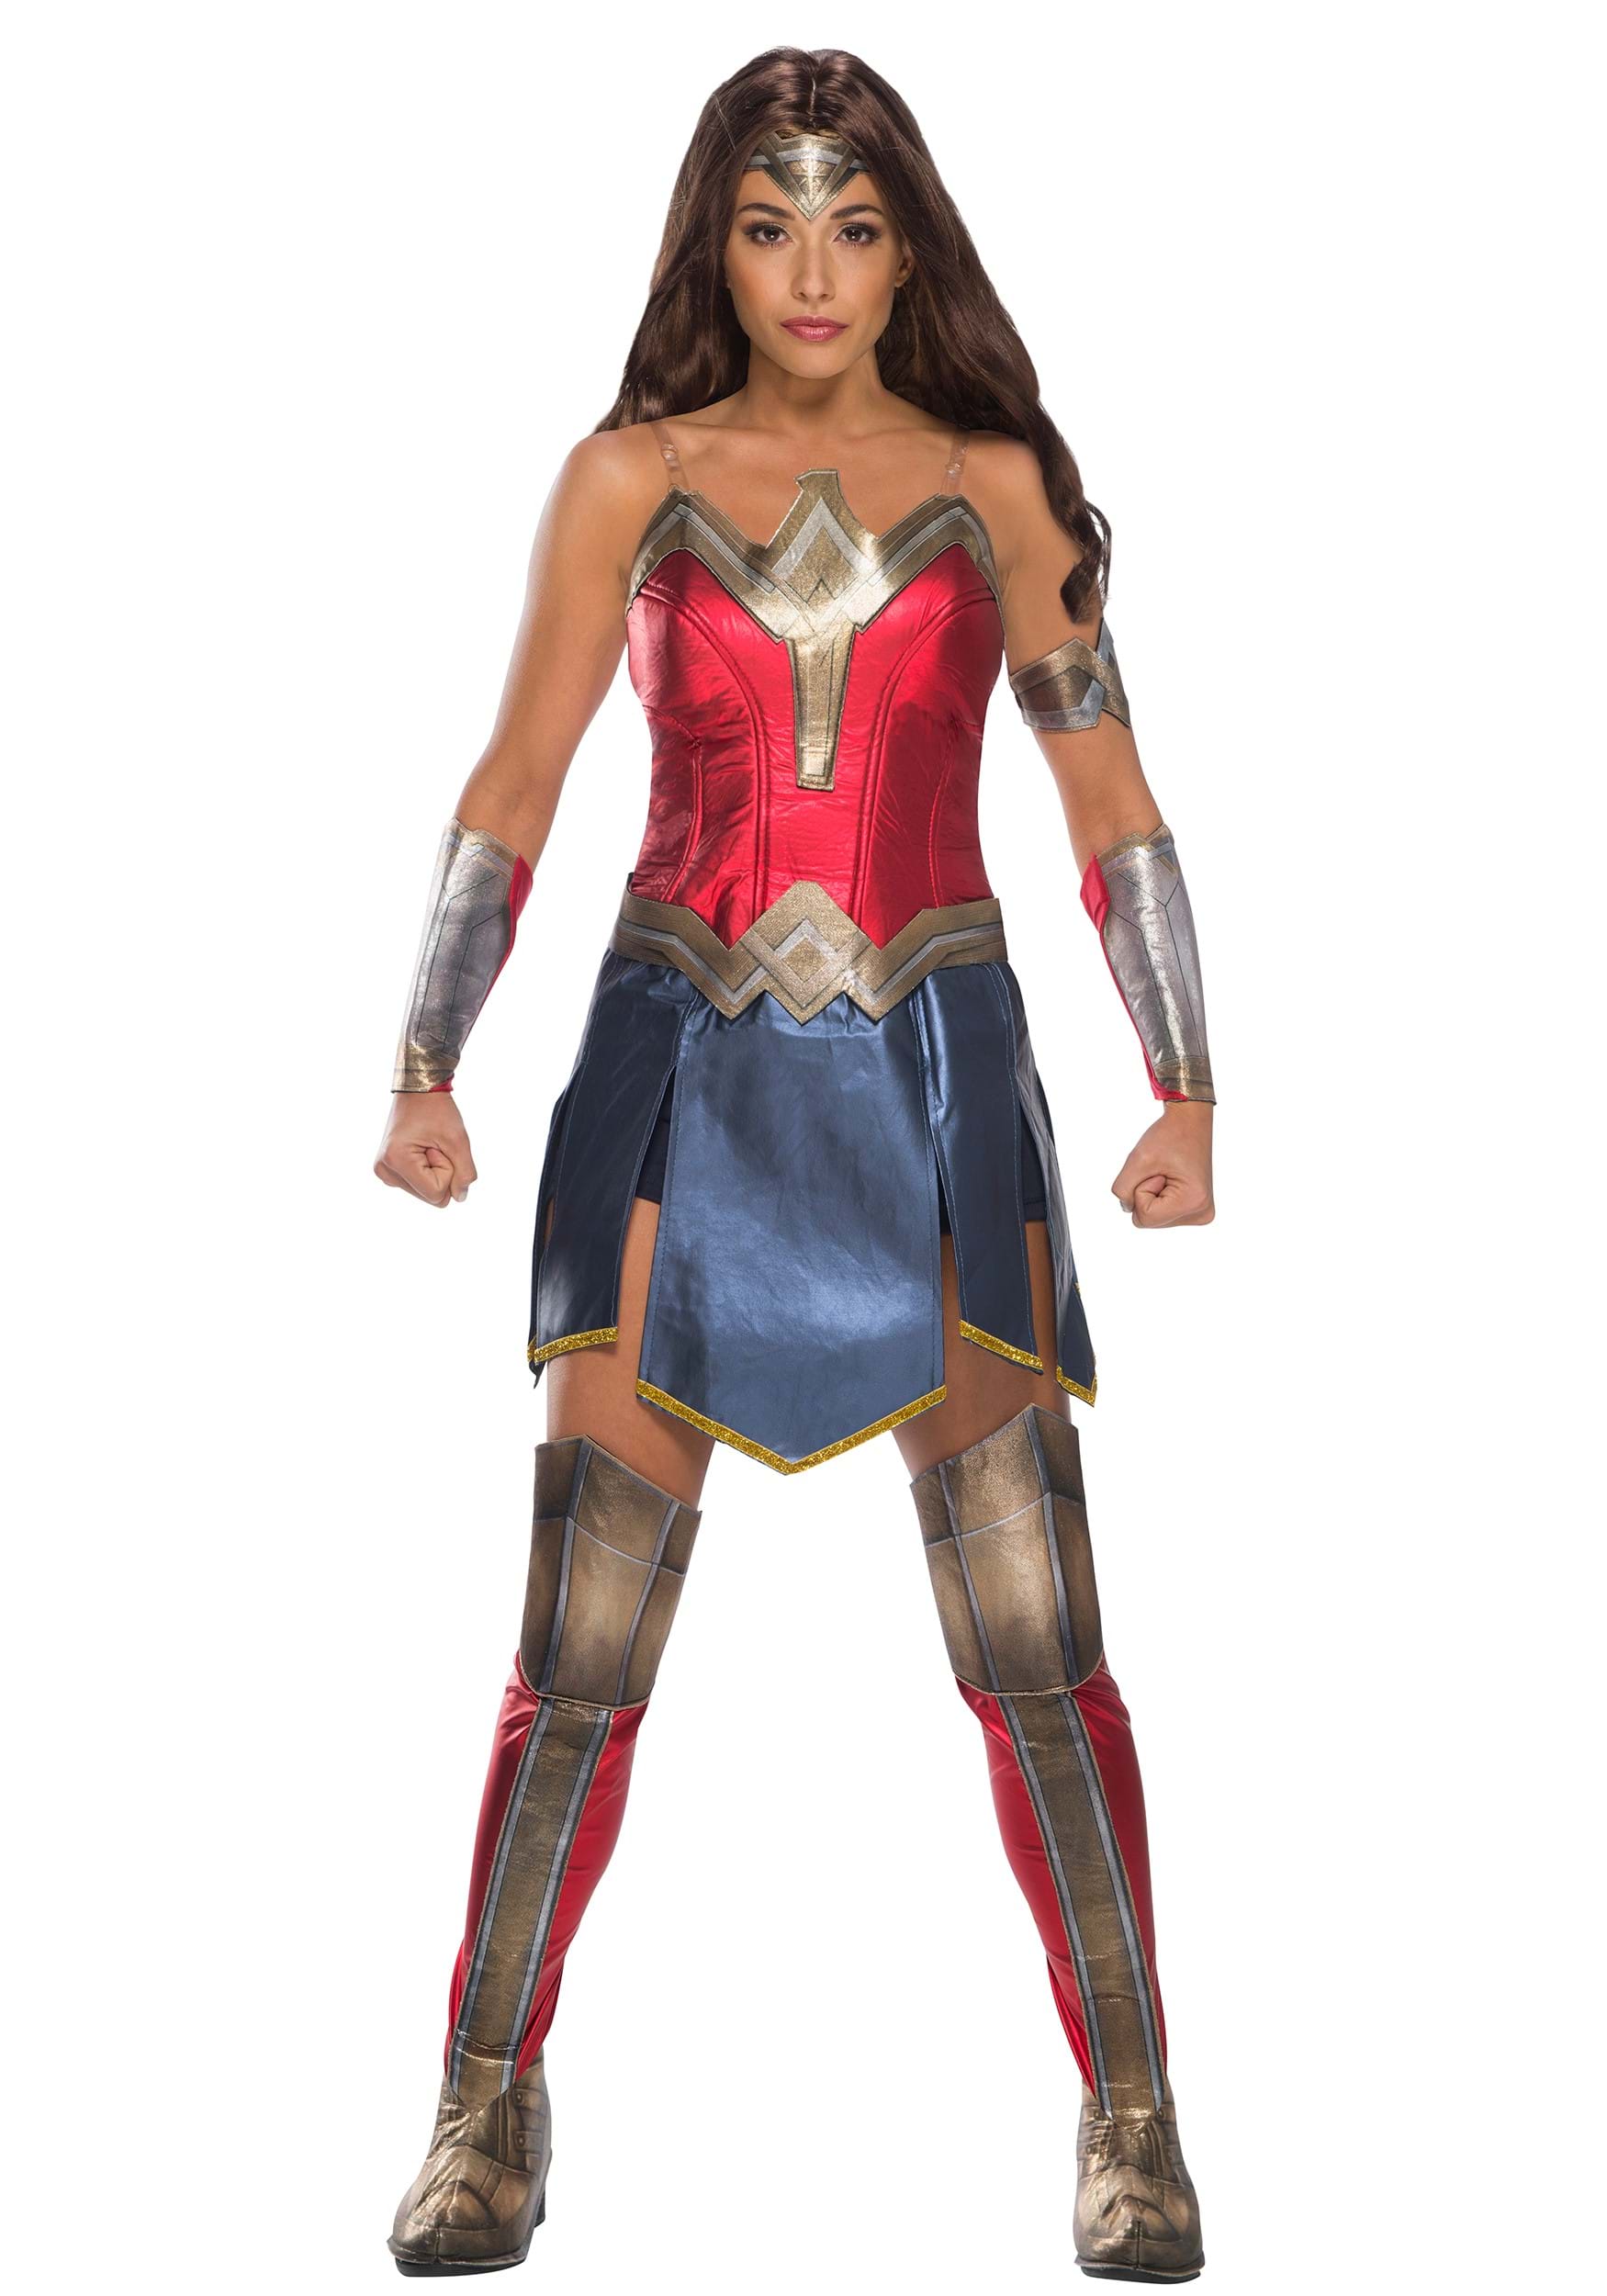 DC Wonder Woman Costume Wrist Cuffs New Adult Size 